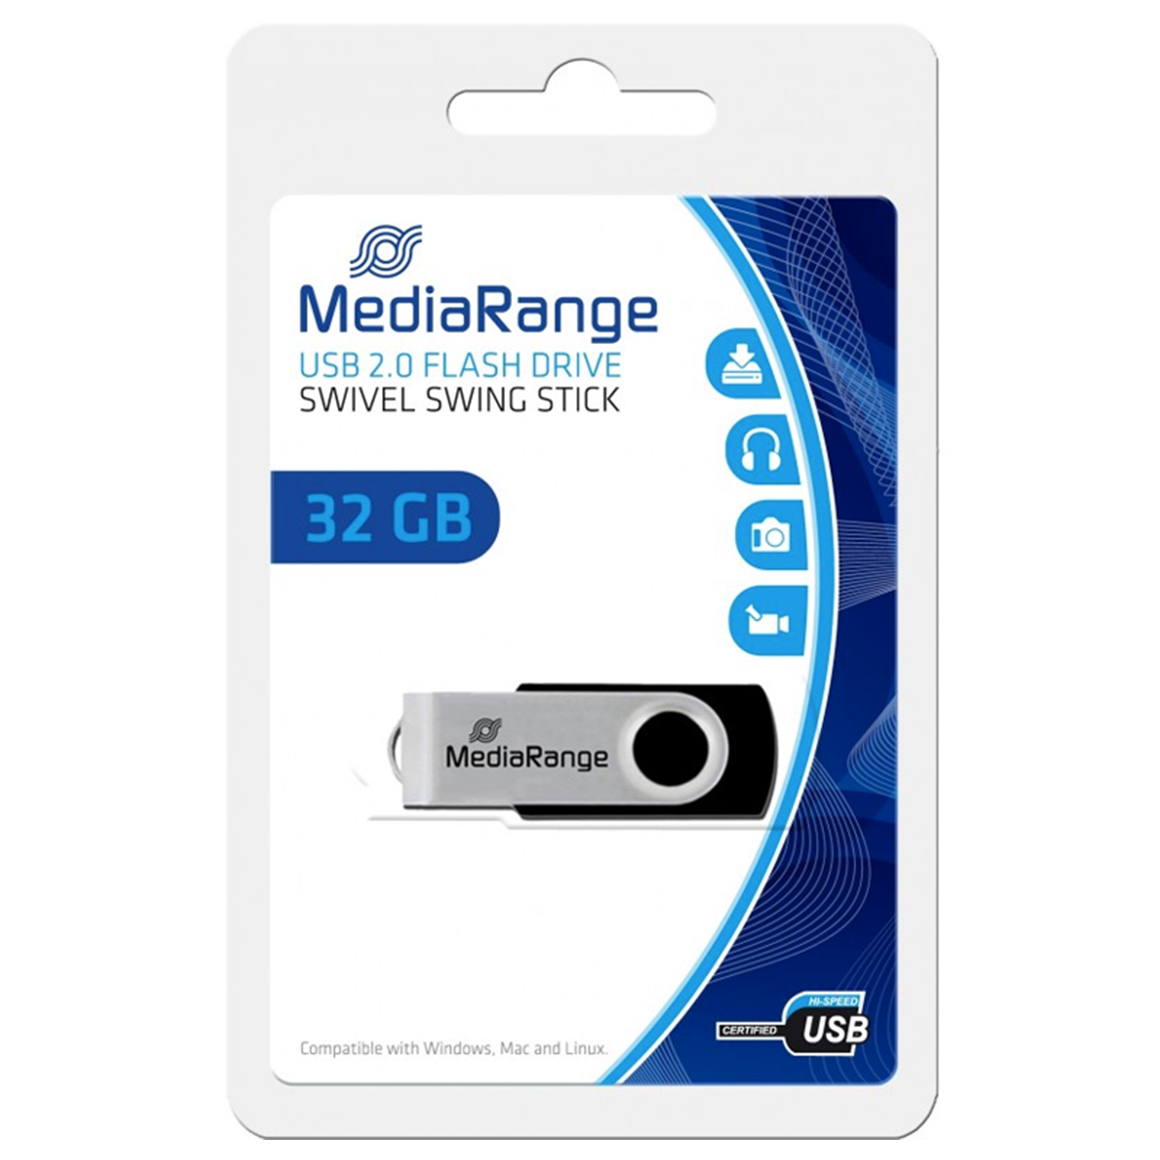 MediaRange USB 2.0 Flash Drive, 32 GB